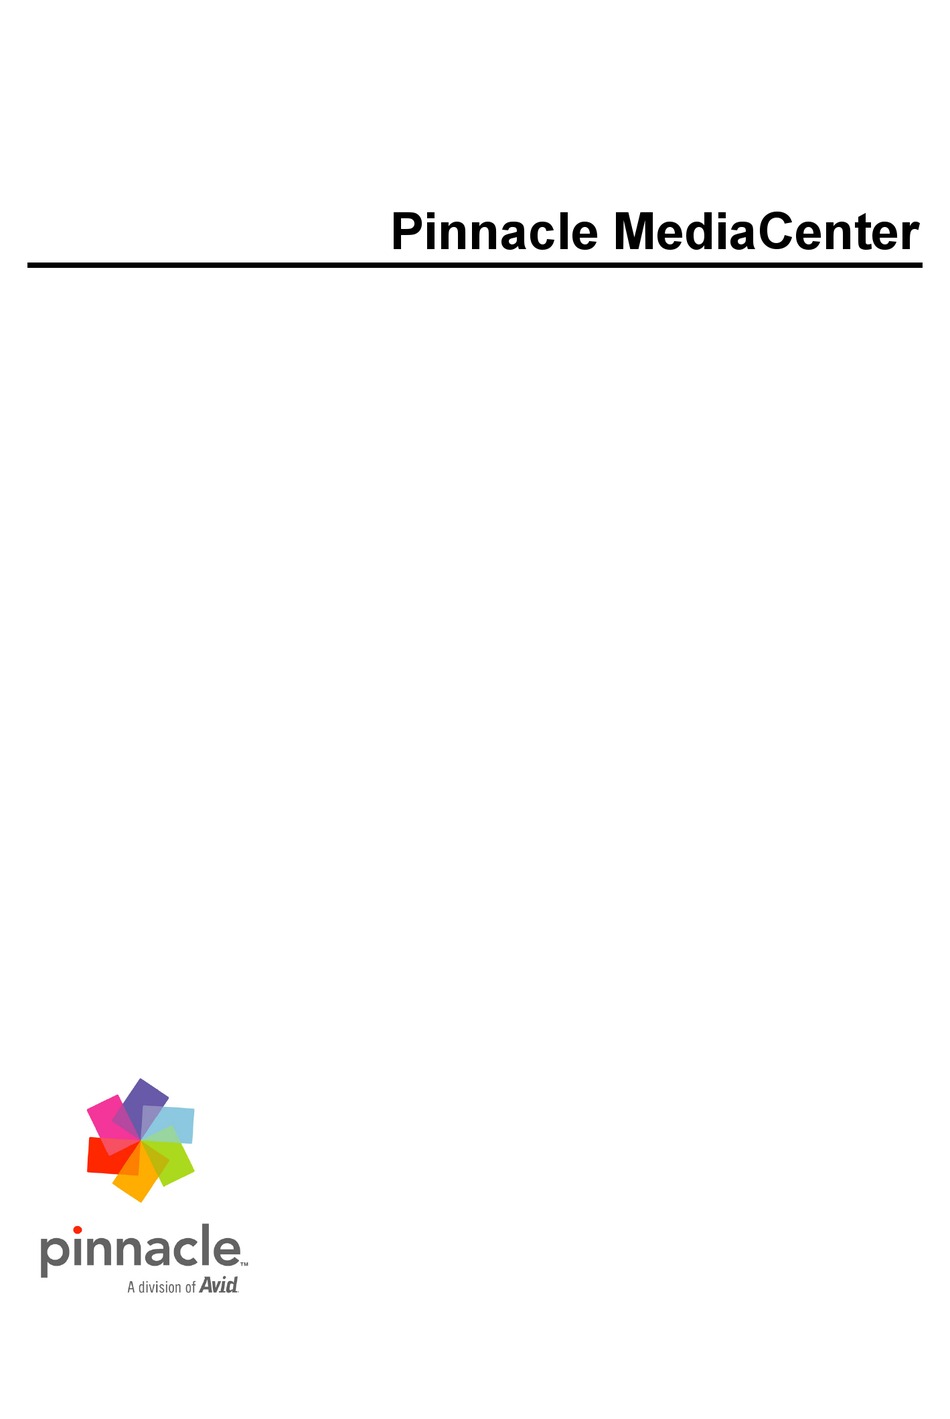 pinnacle mediacenter software